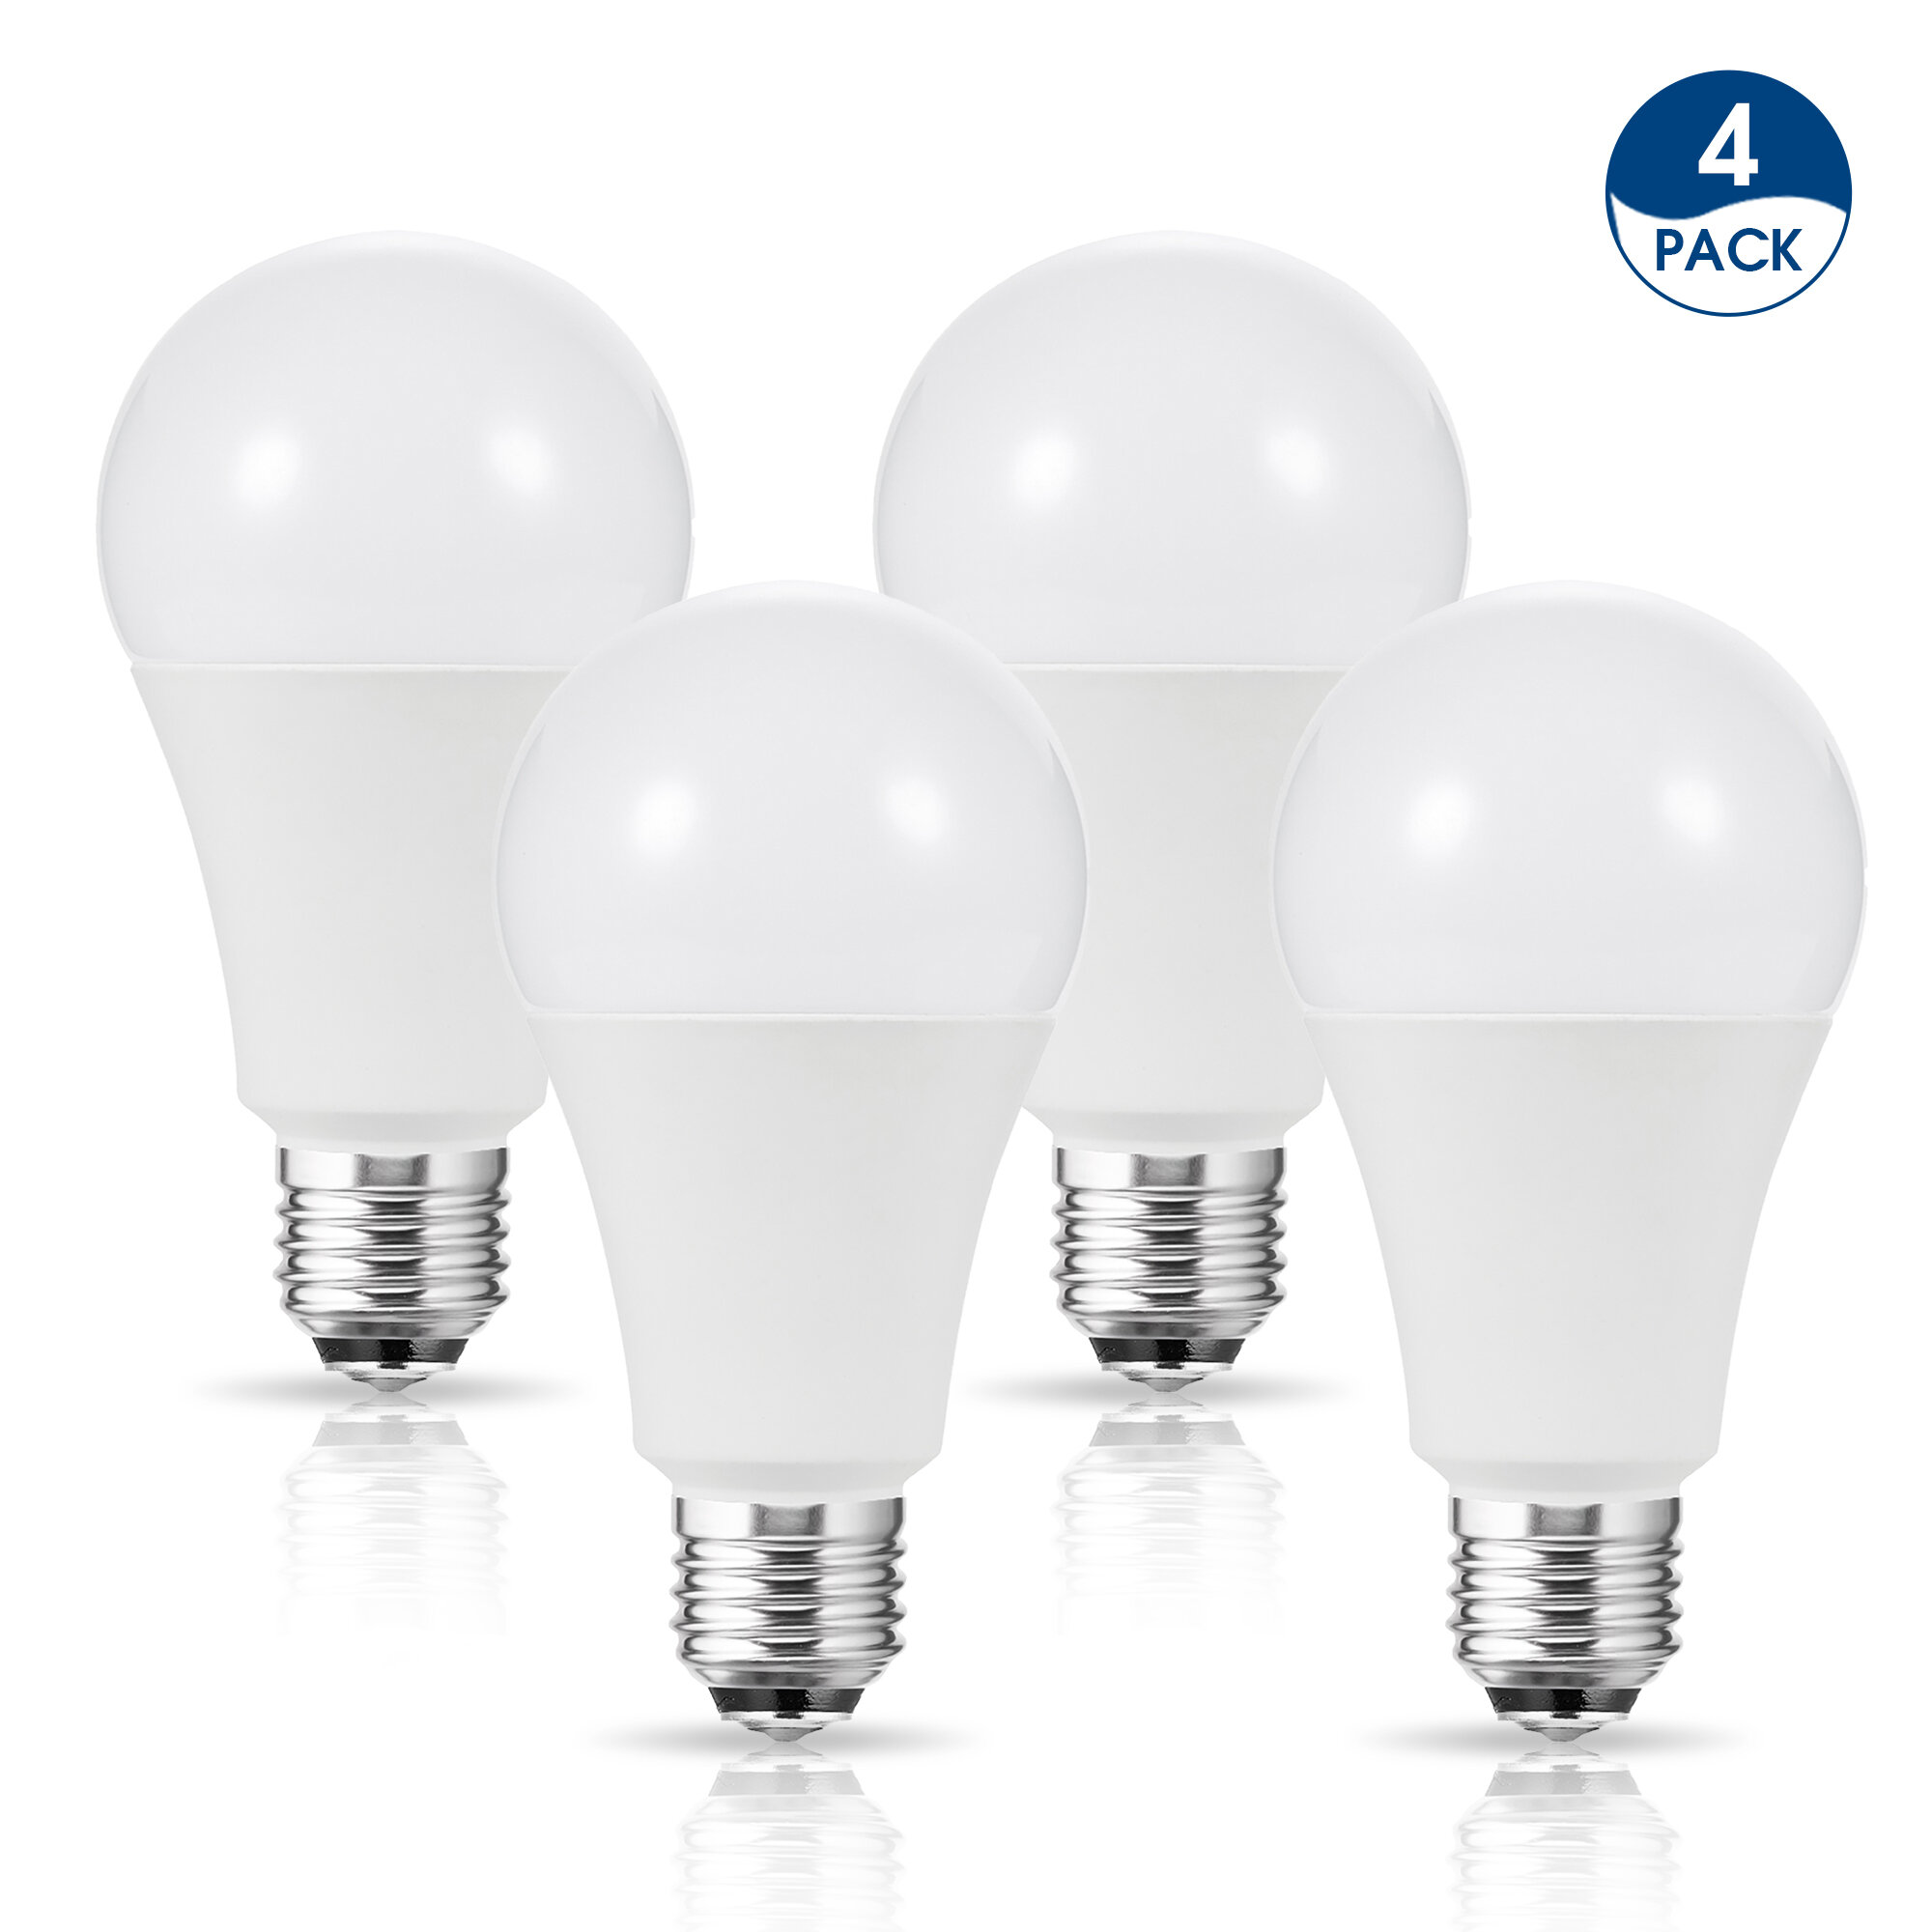 Samsung CSP LED 18W Light Bulb E26 150W Equivalent 2000 Lumen 2700K 4 Pack 